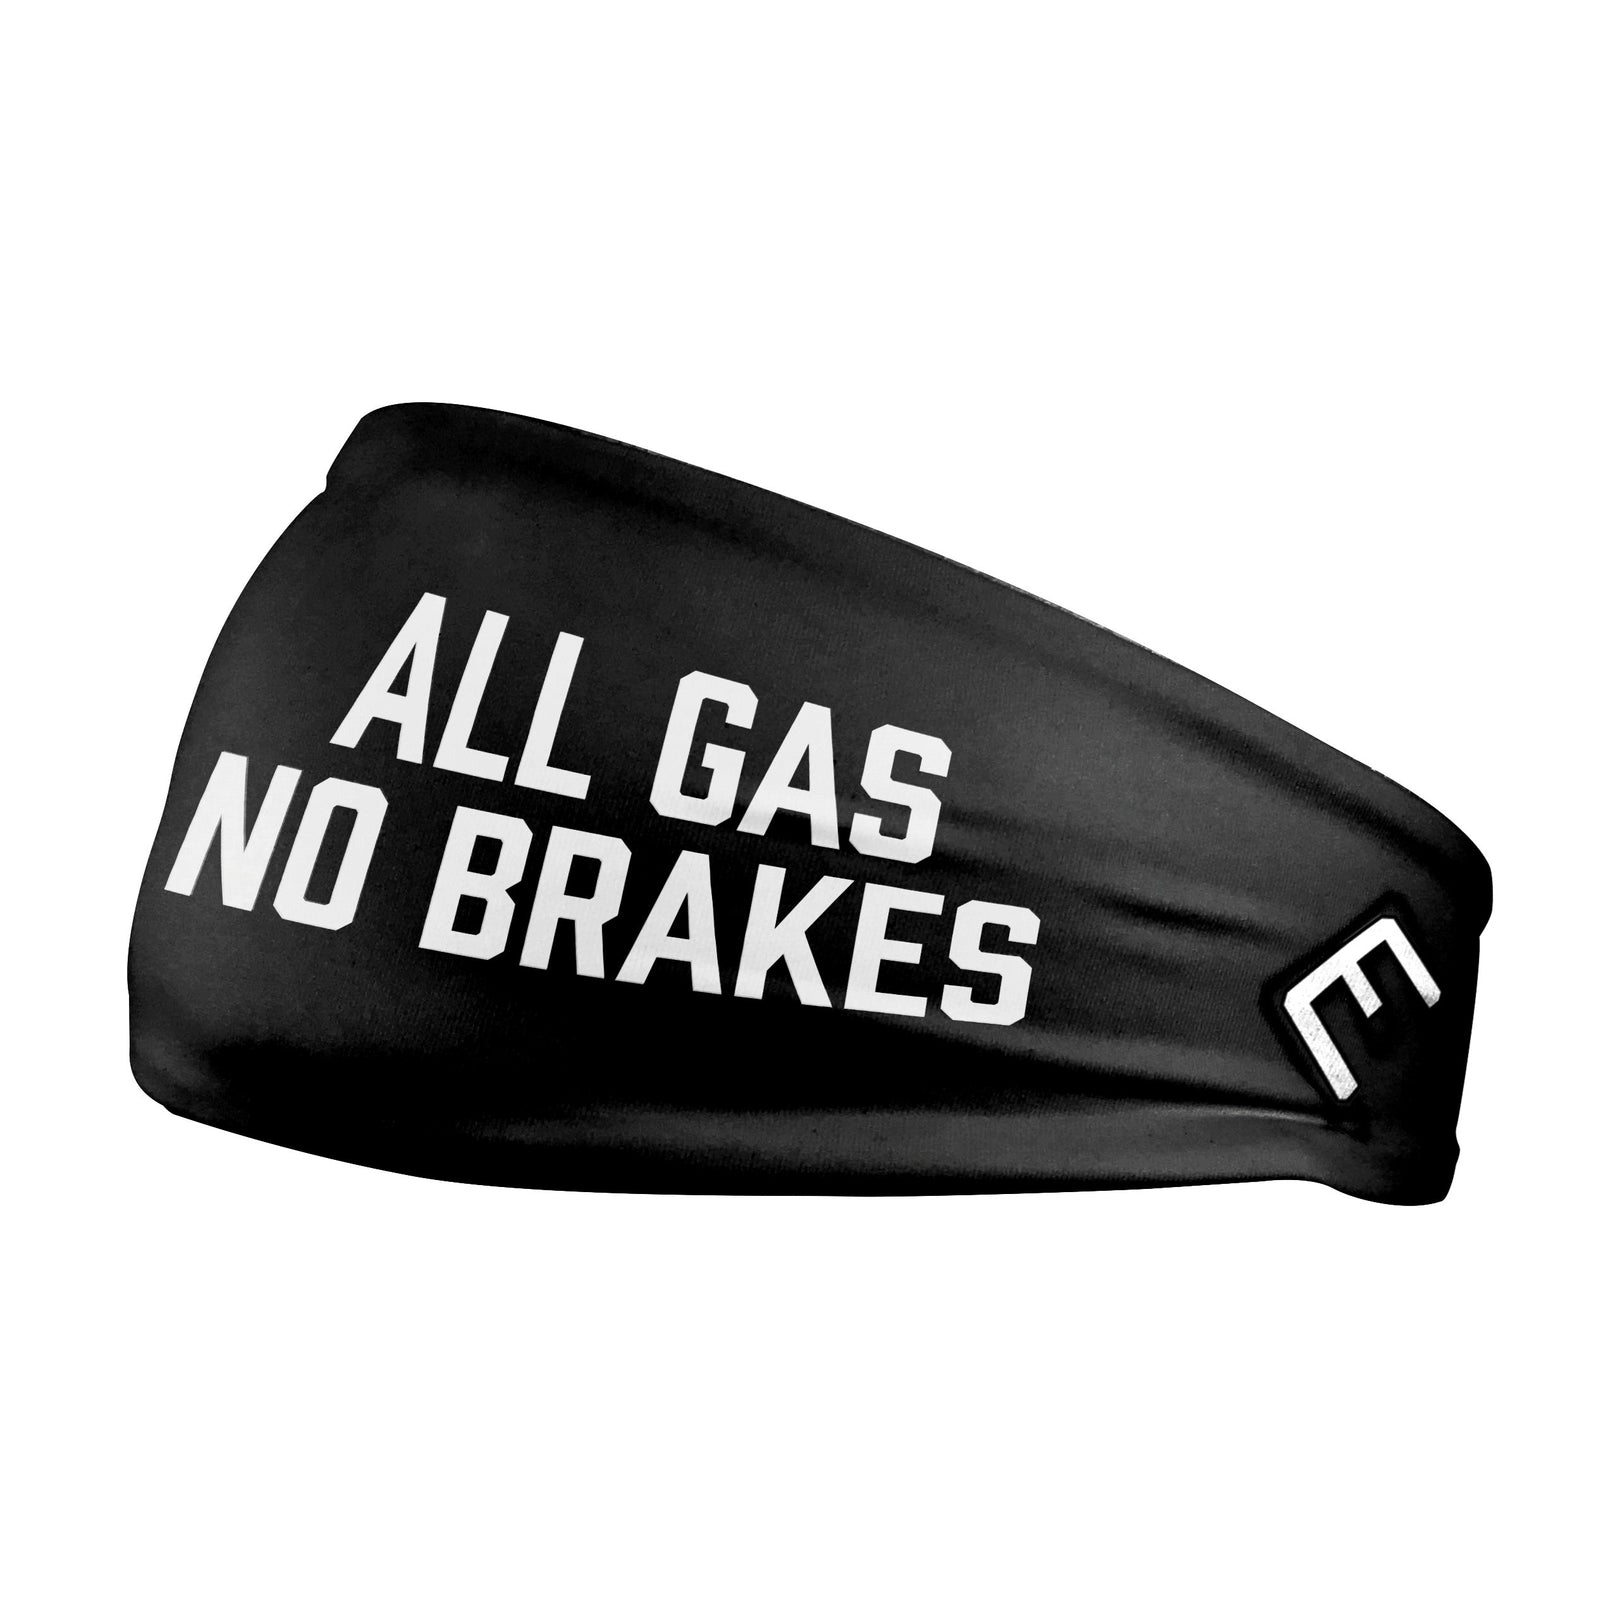 All Gas No Brakes Headband